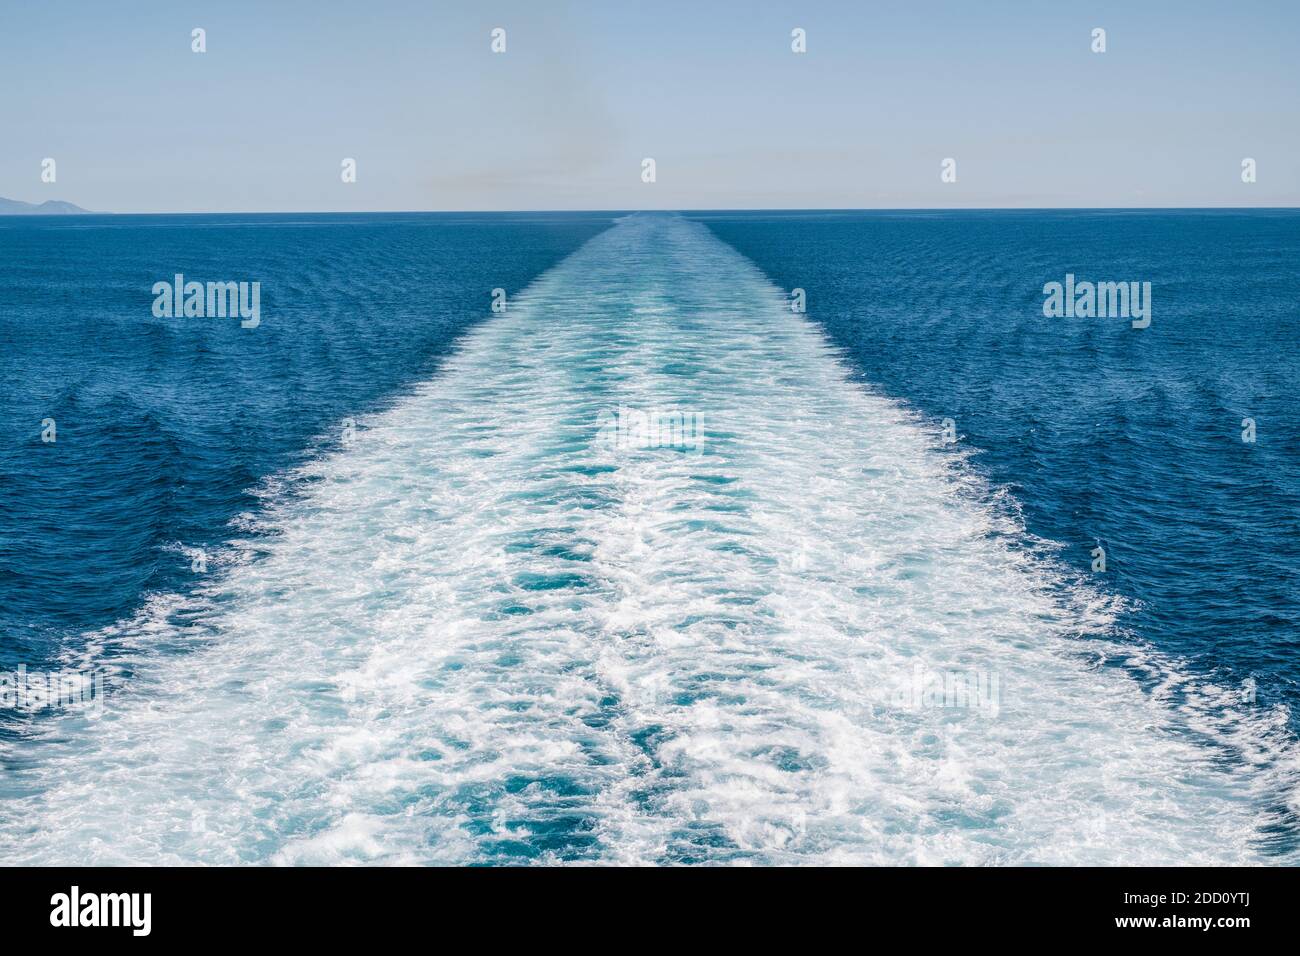 Wake made by cruise ship in the Tyrrhenian Sea between Tuscany and Sardinia, italy Stock Photo